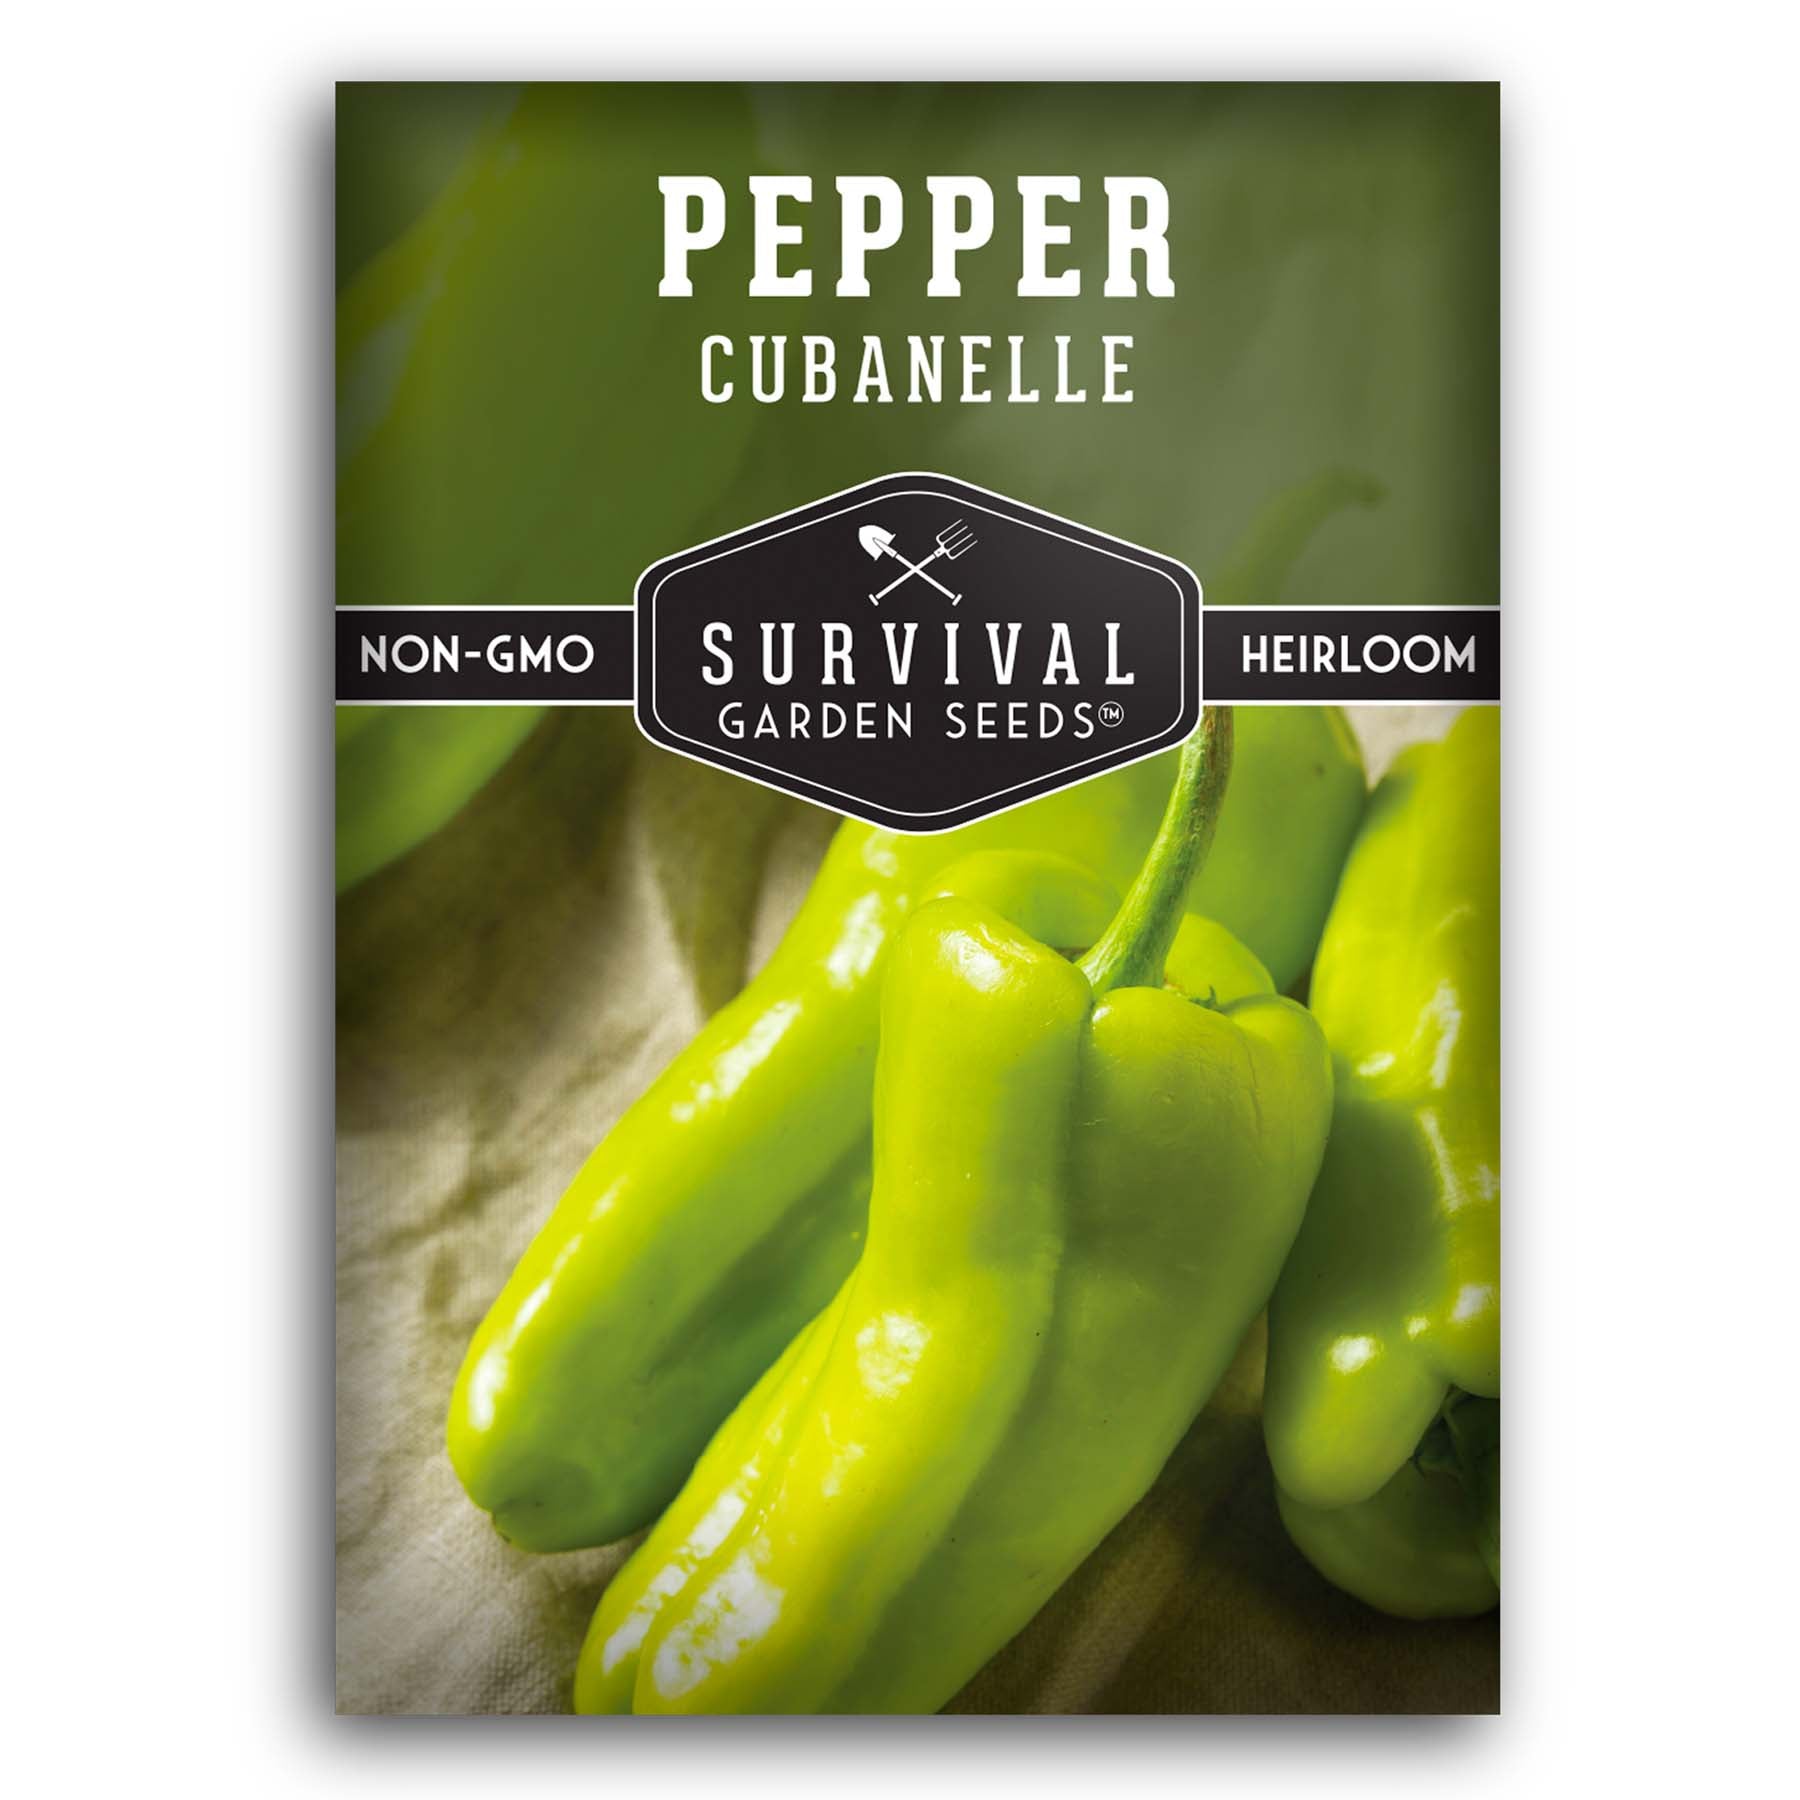 Cubanelle pepper seeds for planting